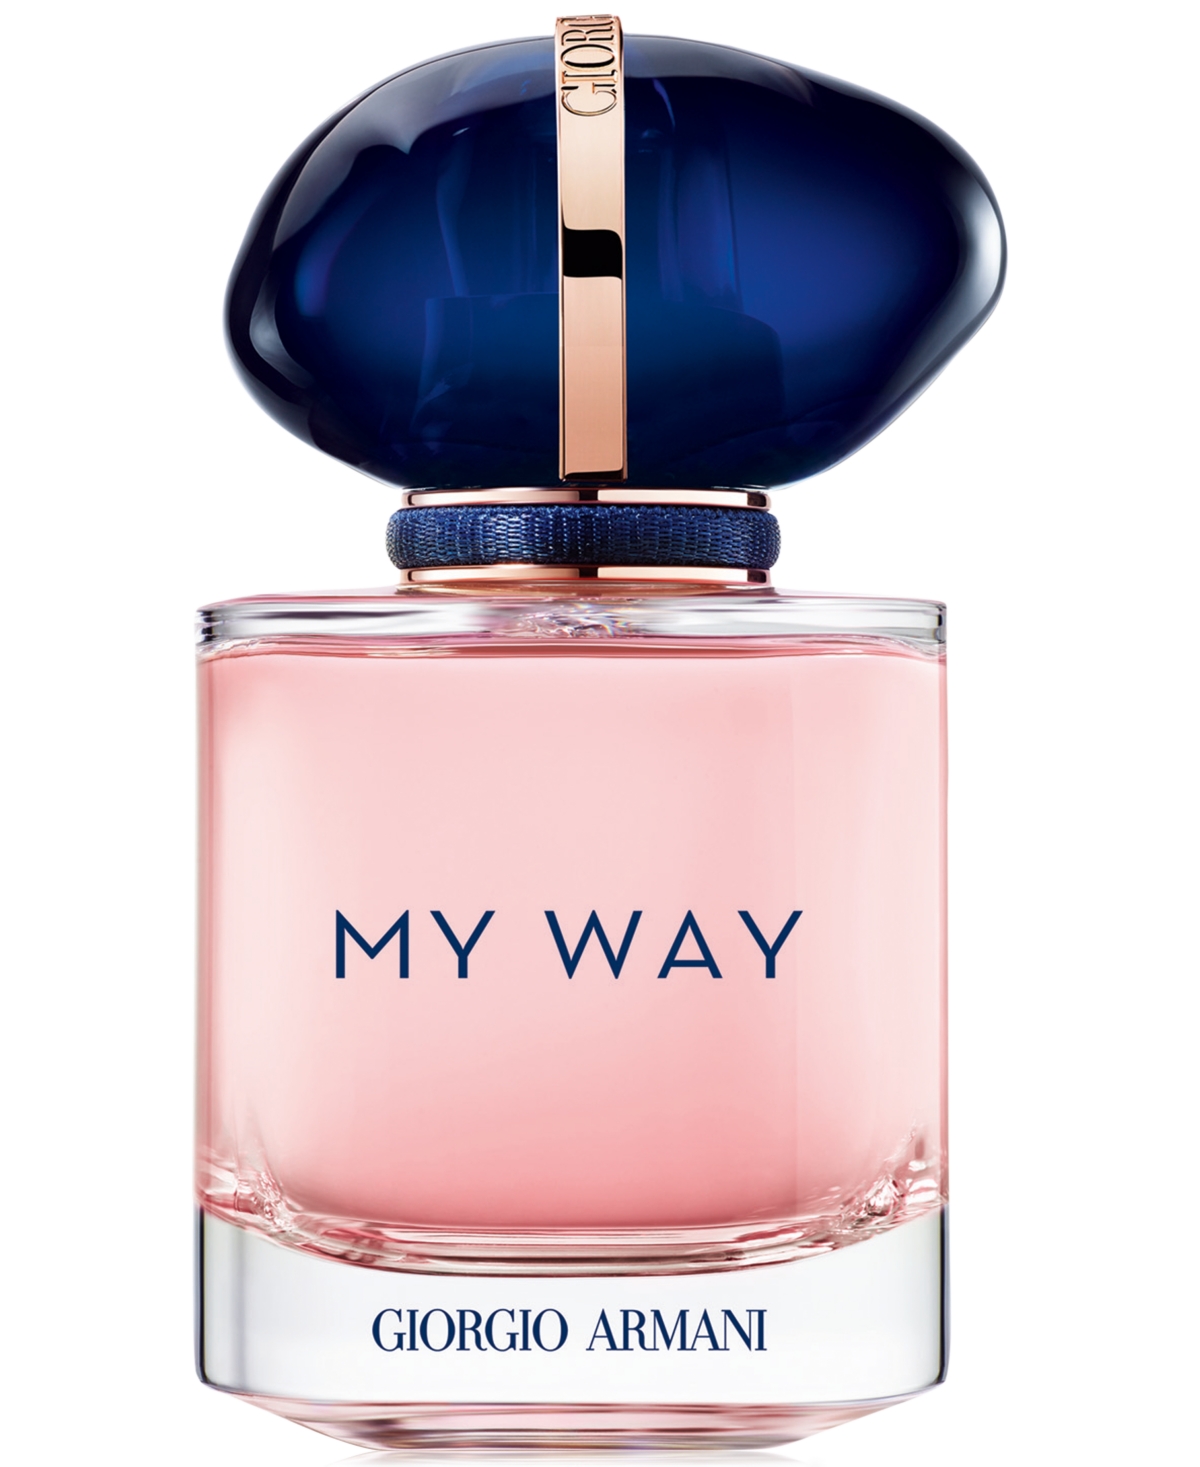 Armani Beauty My Way Eau de Parfum Spray, 1-oz.